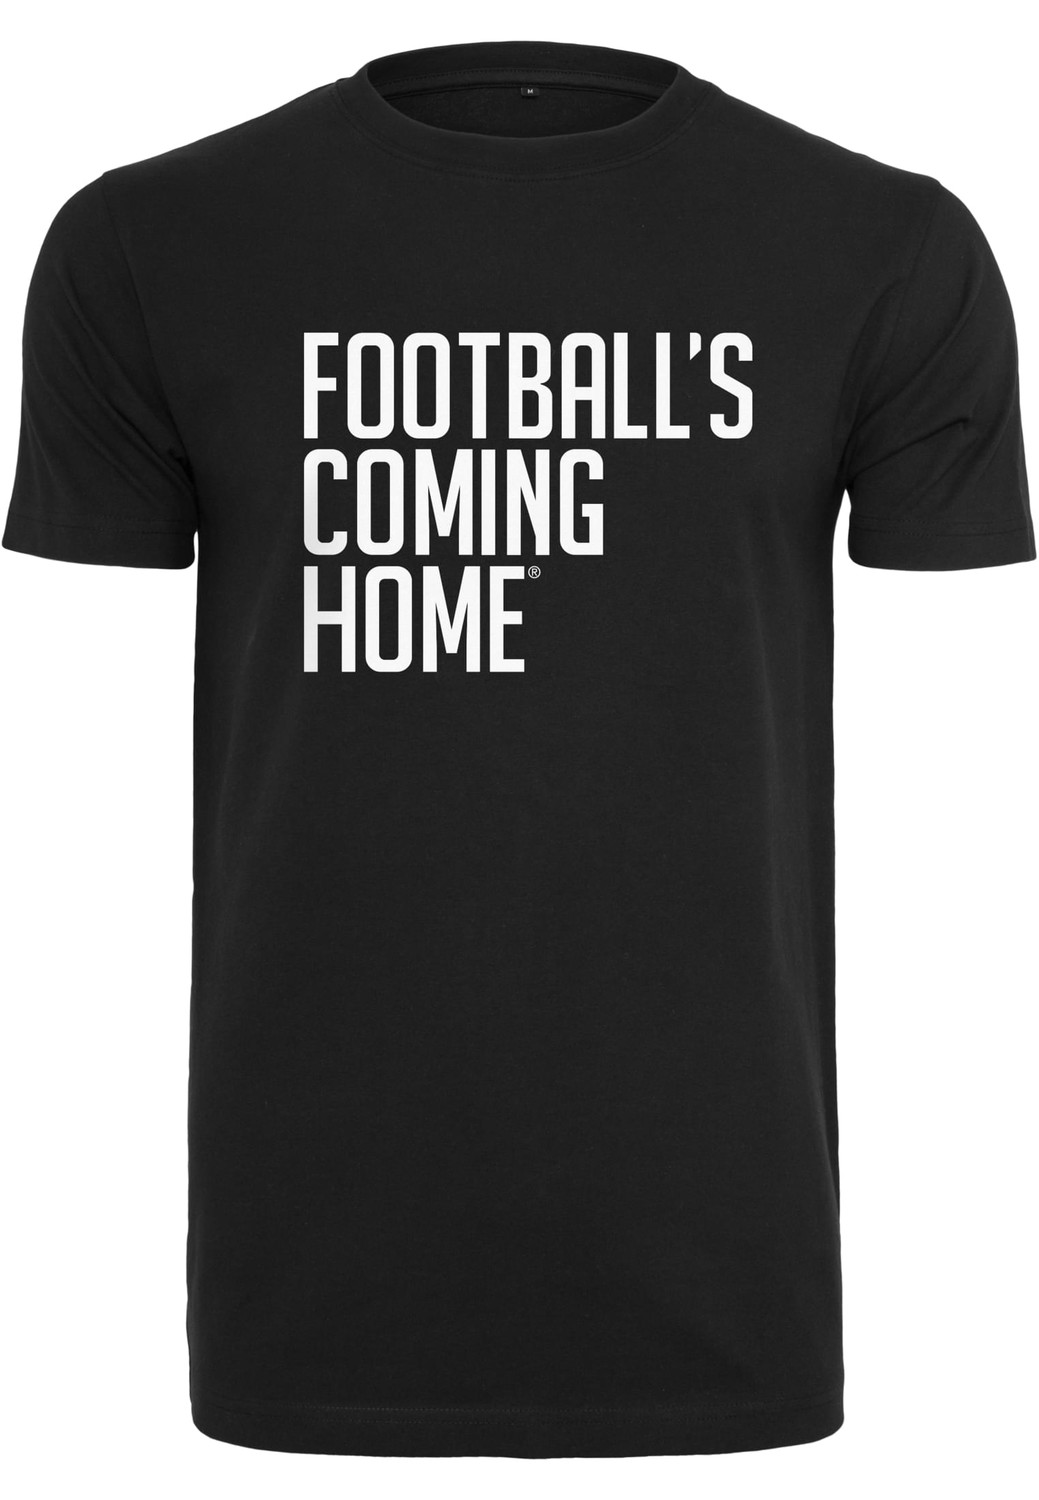 Footballs Coming Home Logo Tee black